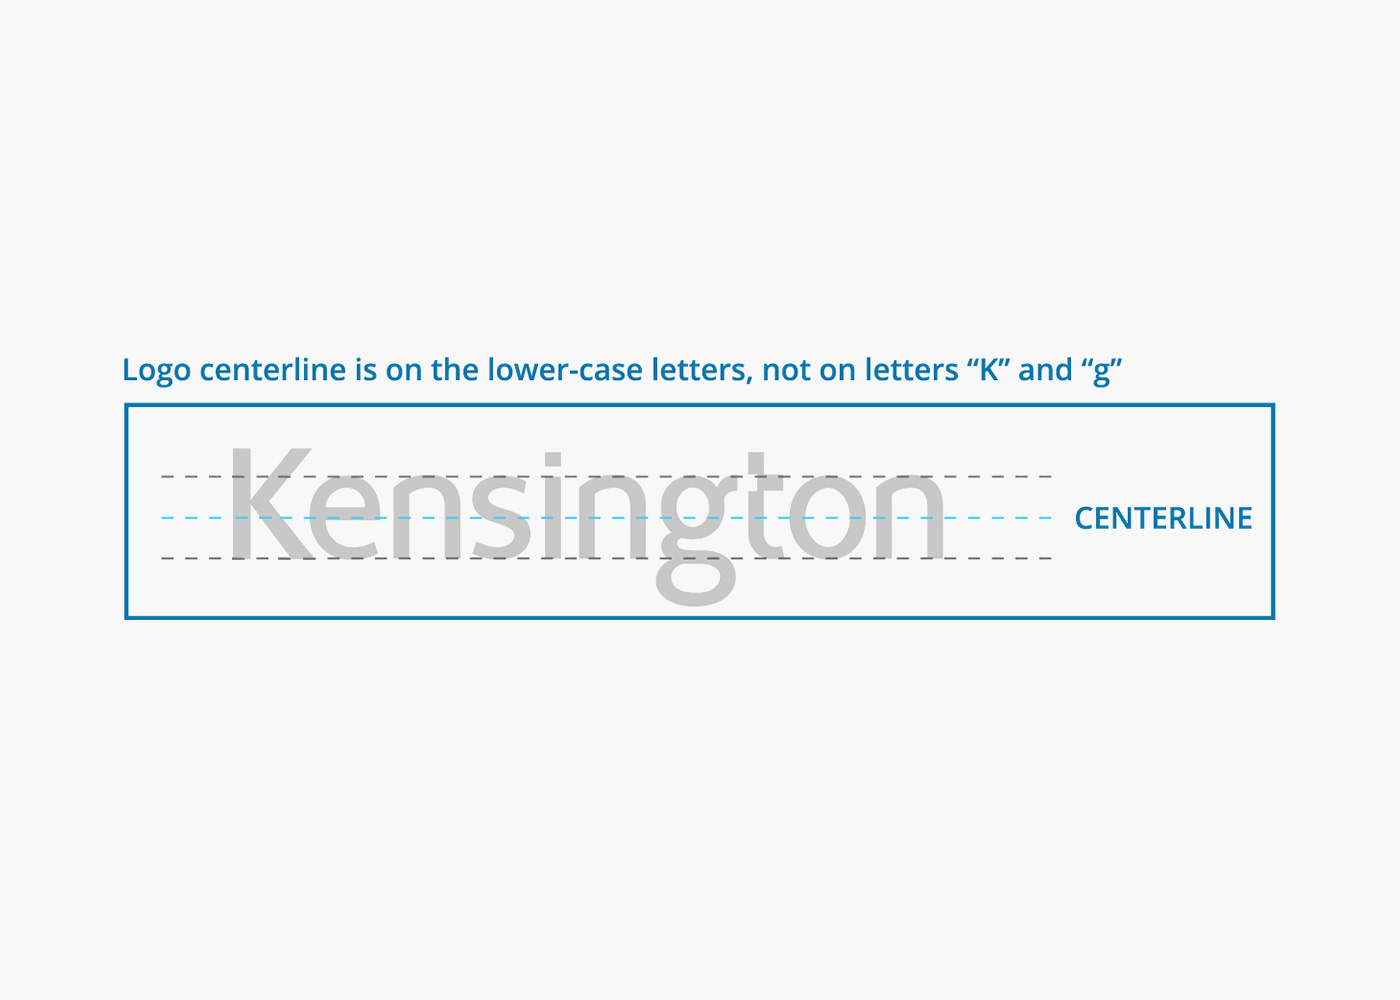 Kensington logo centerline.